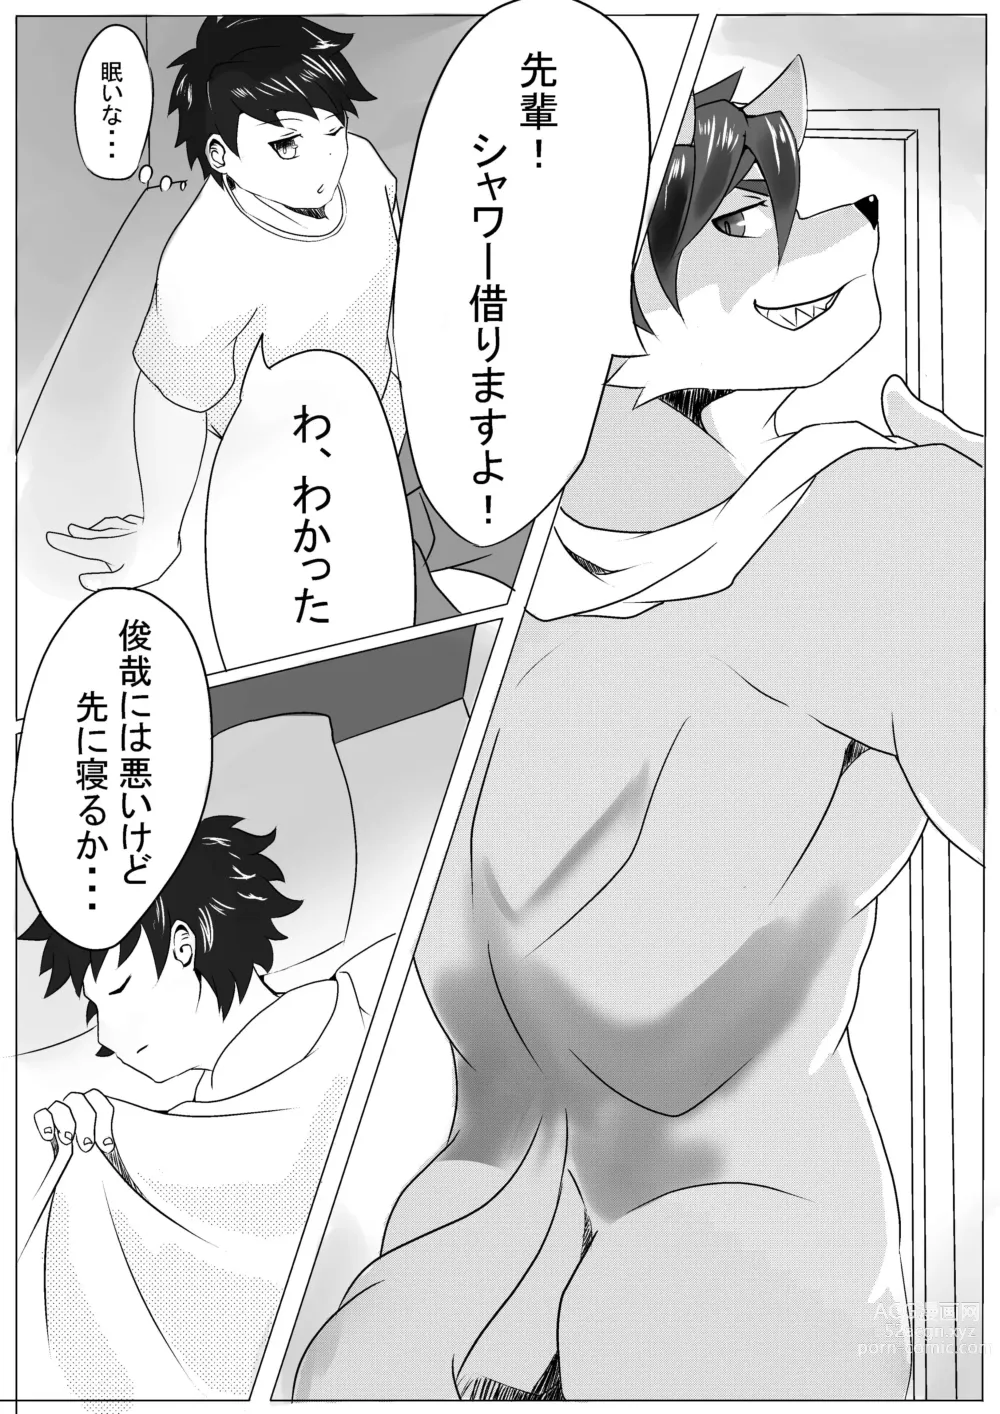 Page 2 of doujinshi Yoru no Ookami